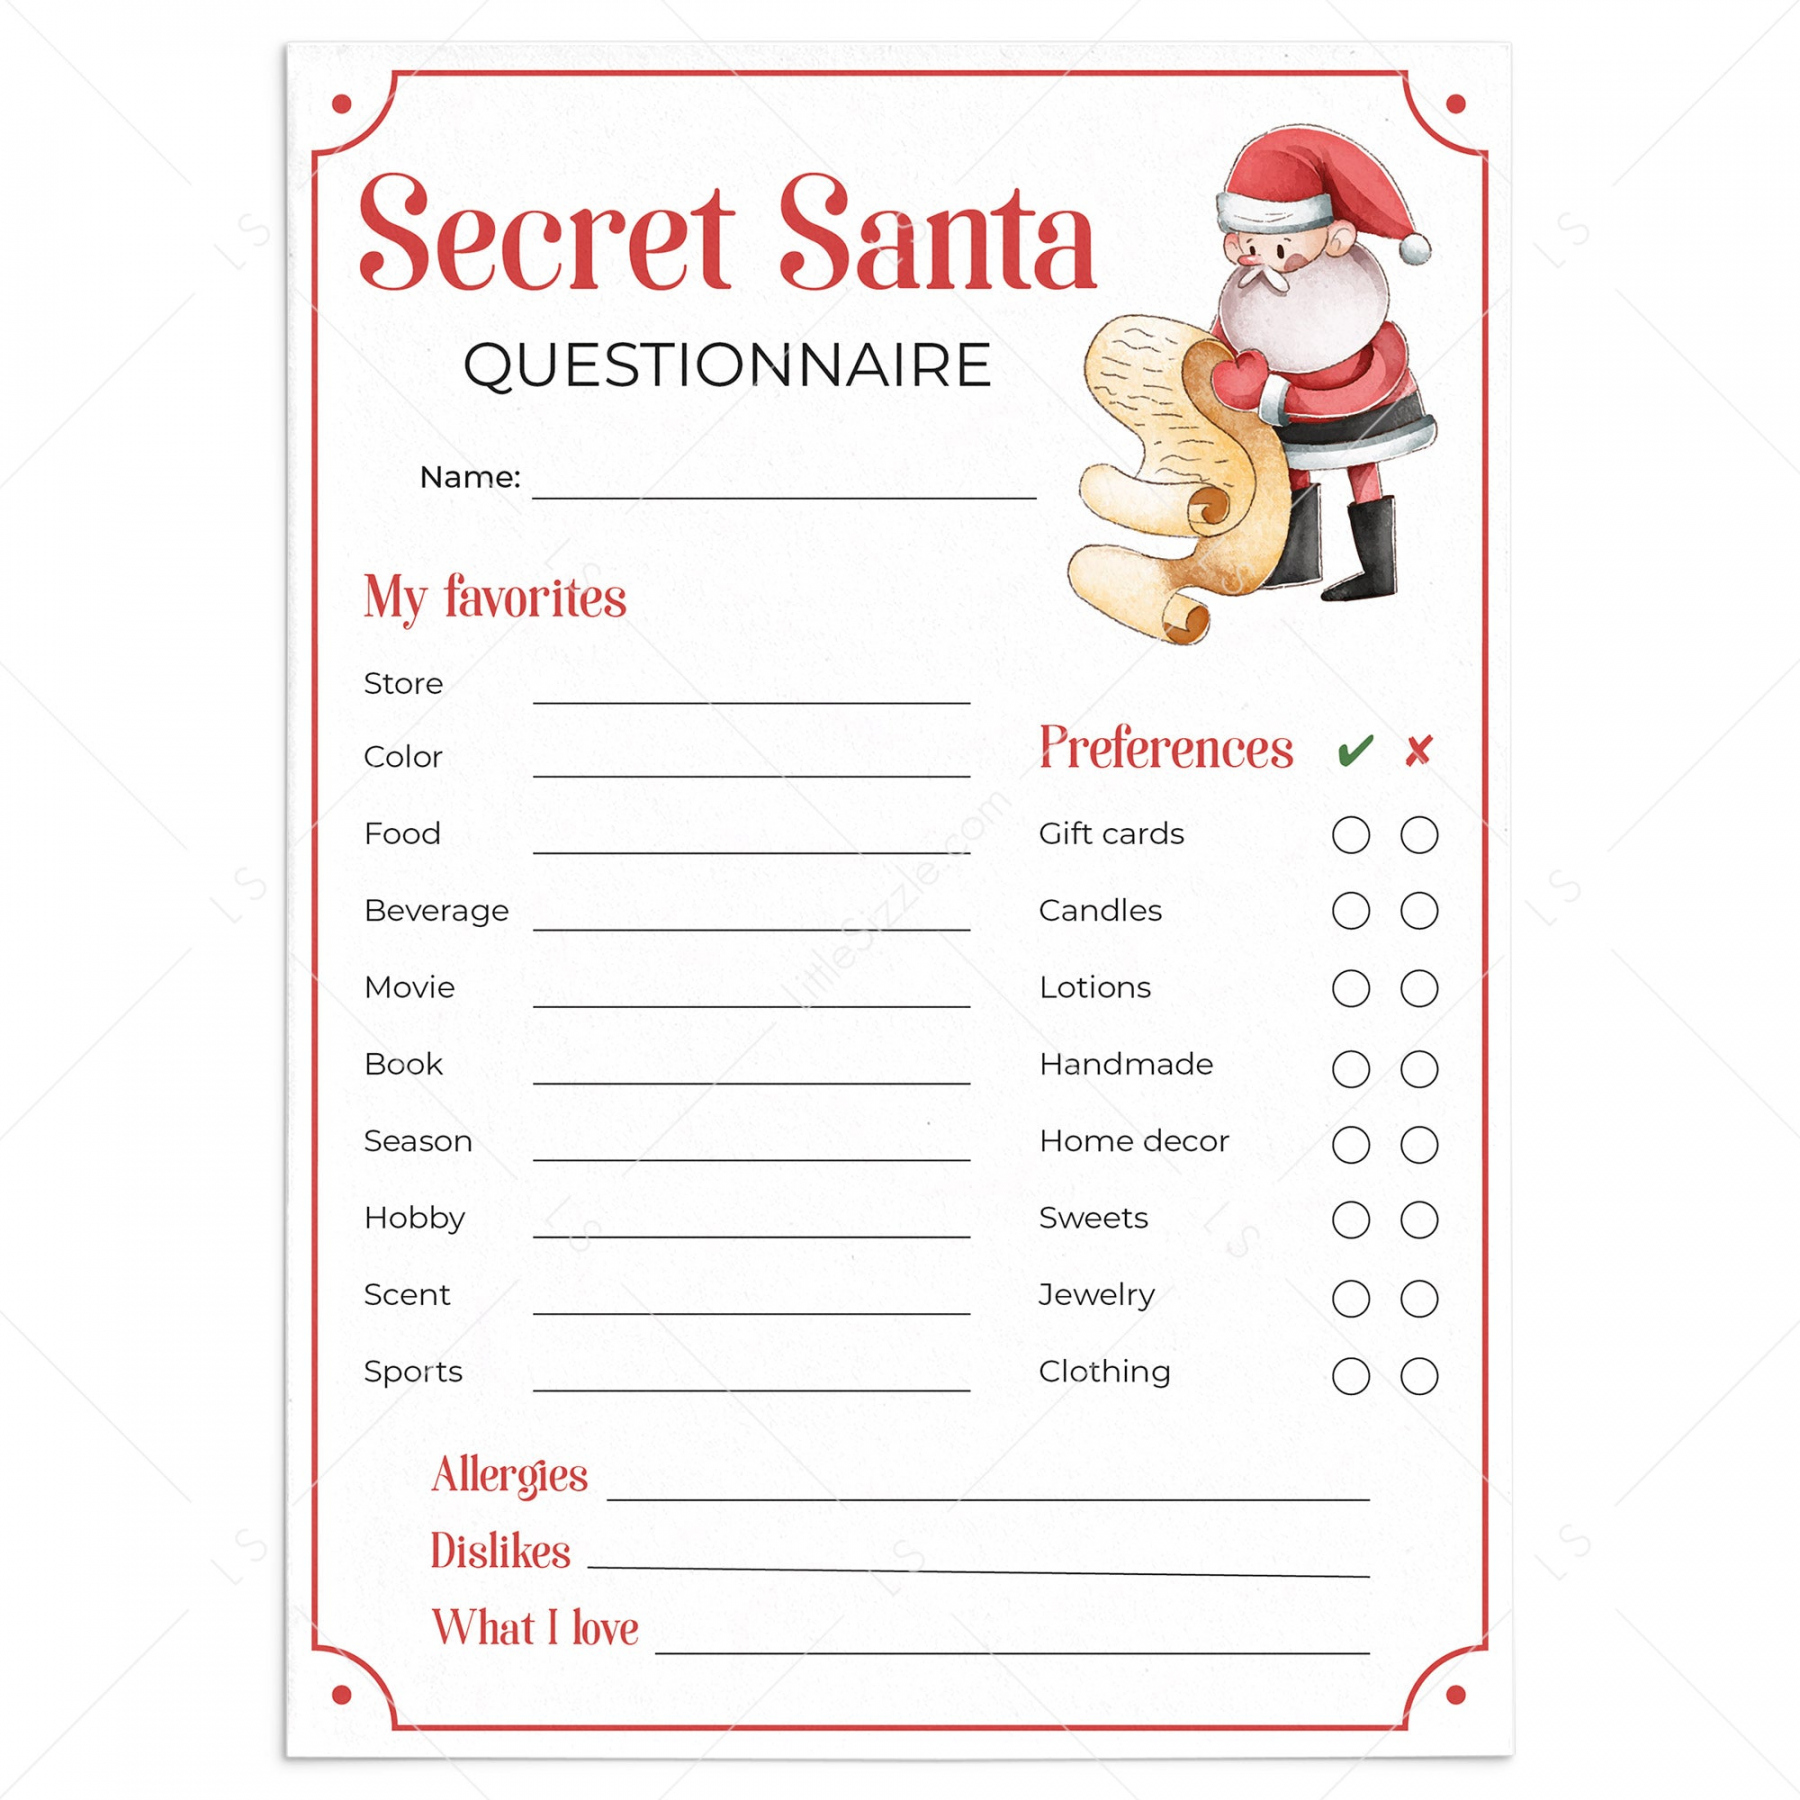 Secret Santa Questionnaire for Gift Exchange Printable - FREE Printables - Secret Santa Questionnaire Free Printable